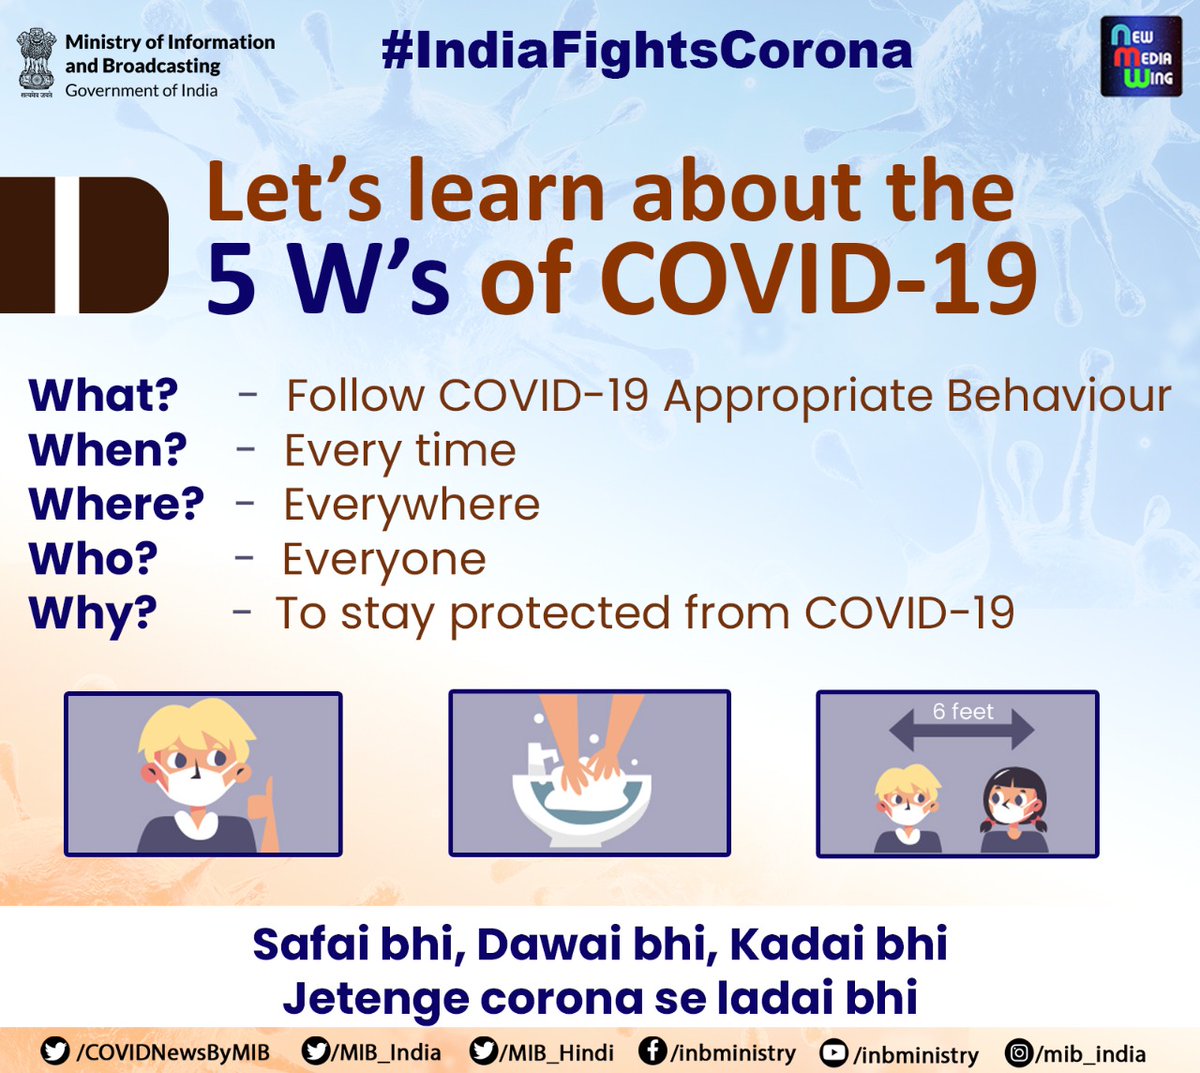 #IndiaFightsCorona 
#JanAndolan
The 5W's of COVID-19
@PIB_Guwahati @PIBGangtok 
@SpokespersonMoD @nhm_assam 
@mygovassam @airnews_ghy @Arogyasetu @diprassam @easterncomd @official_dgar @nccner